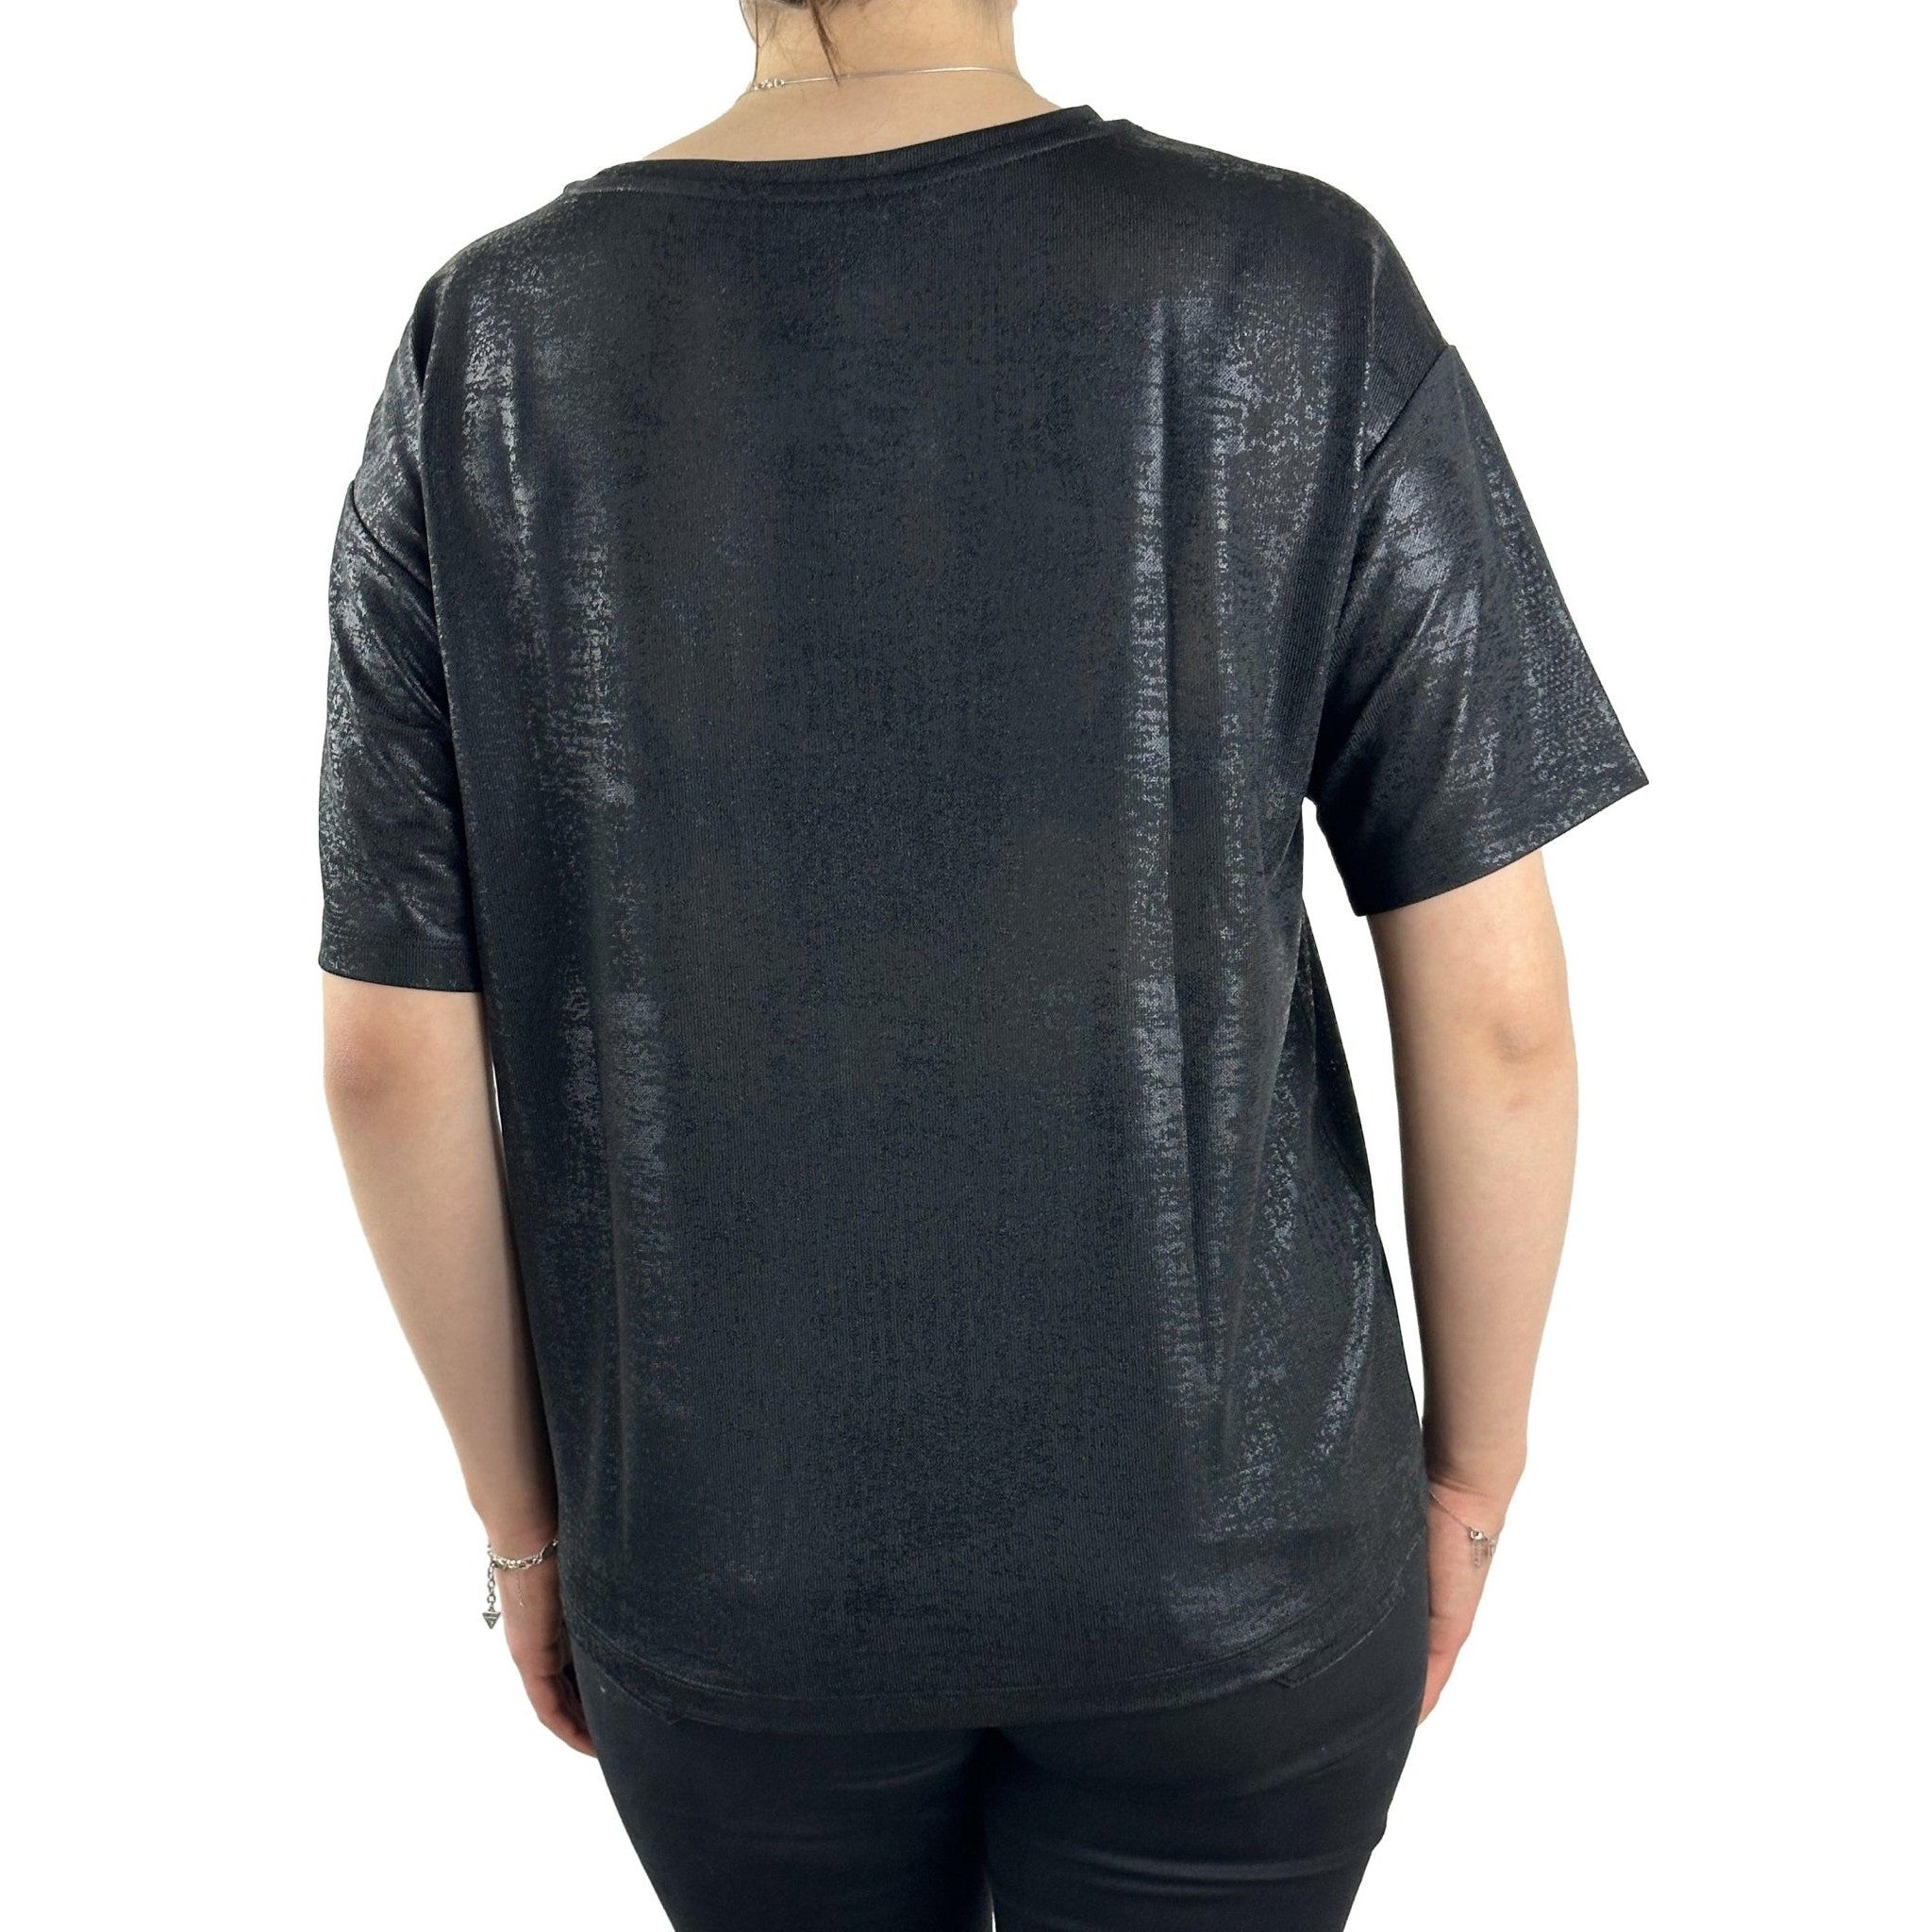 Monari Shirt 408710. Mode von Monari